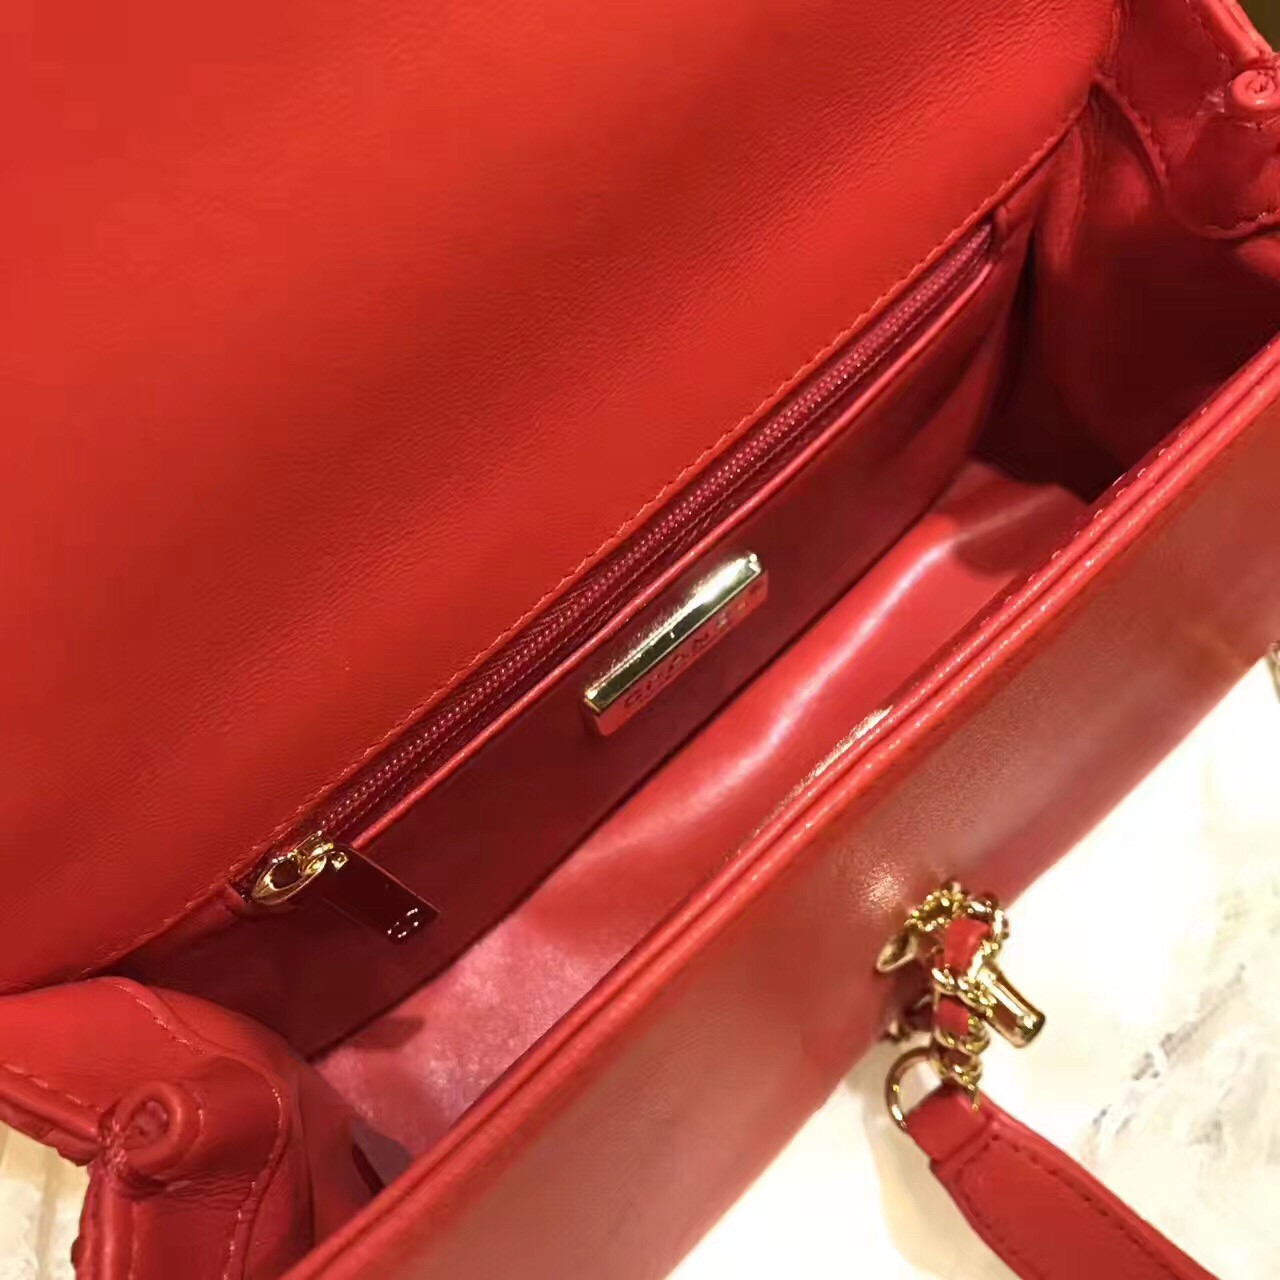 Chanel Flap Bag With Top Handle - TXCN036